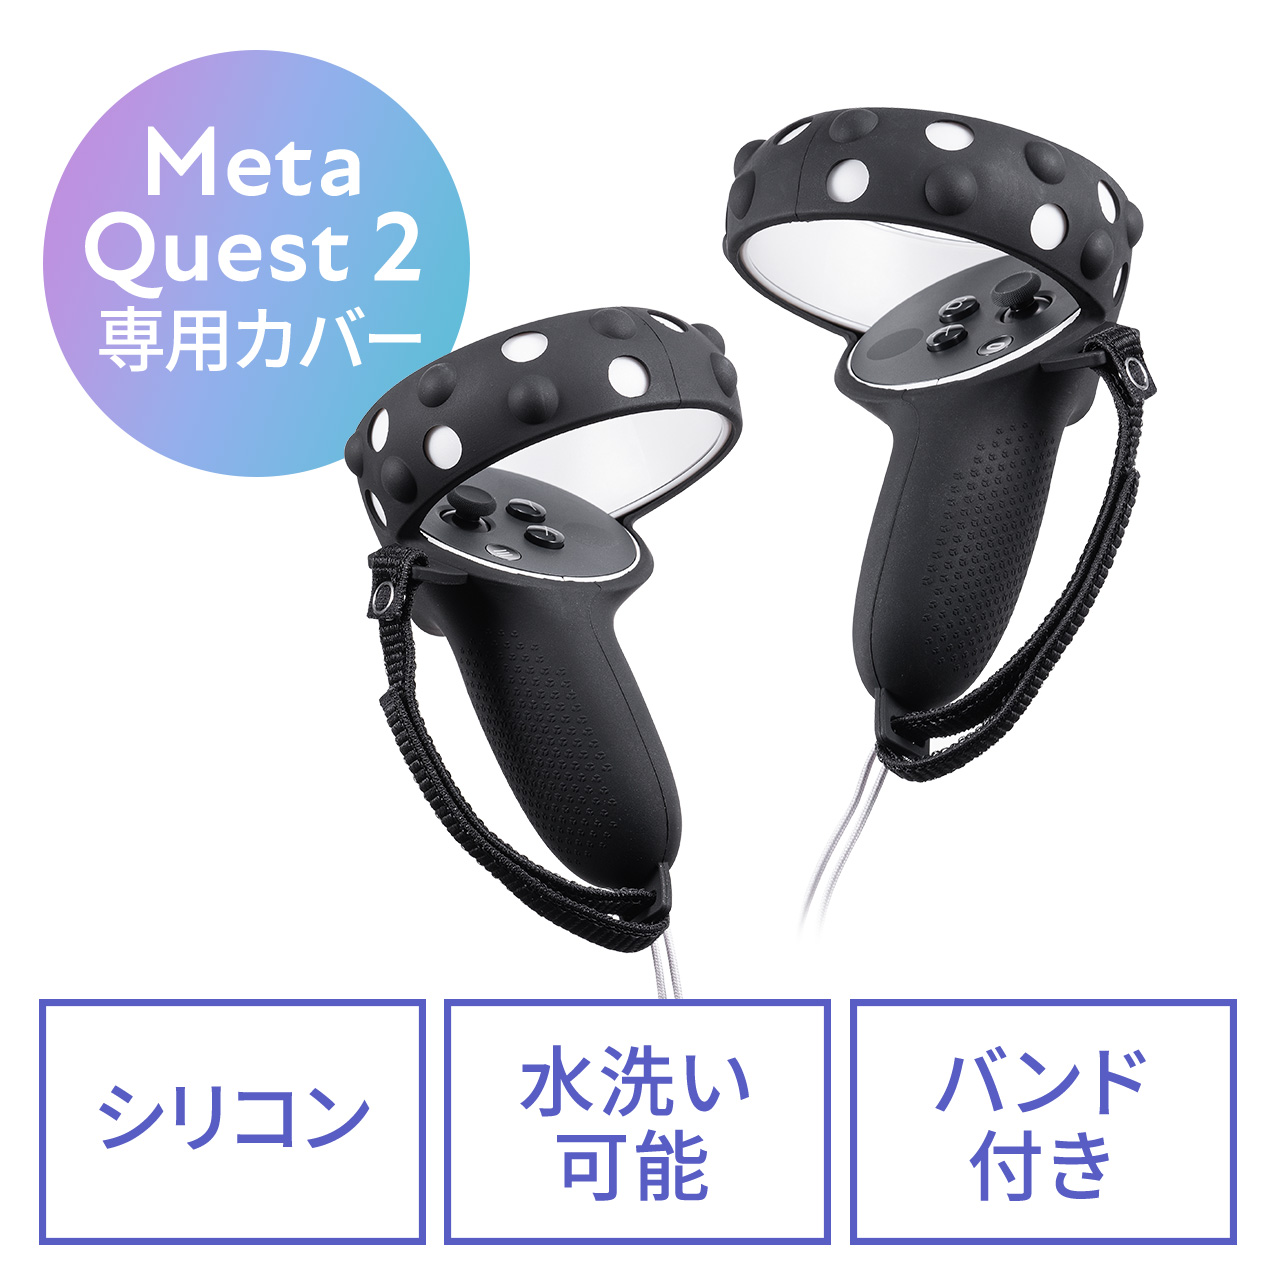 Meta Quest 2 Oculus Quest 2 用シェルカバー シリコン 簡単装着シリコンコントローラーカバー シリコン 落下防止バンド付き 400-MEDIQ2C002